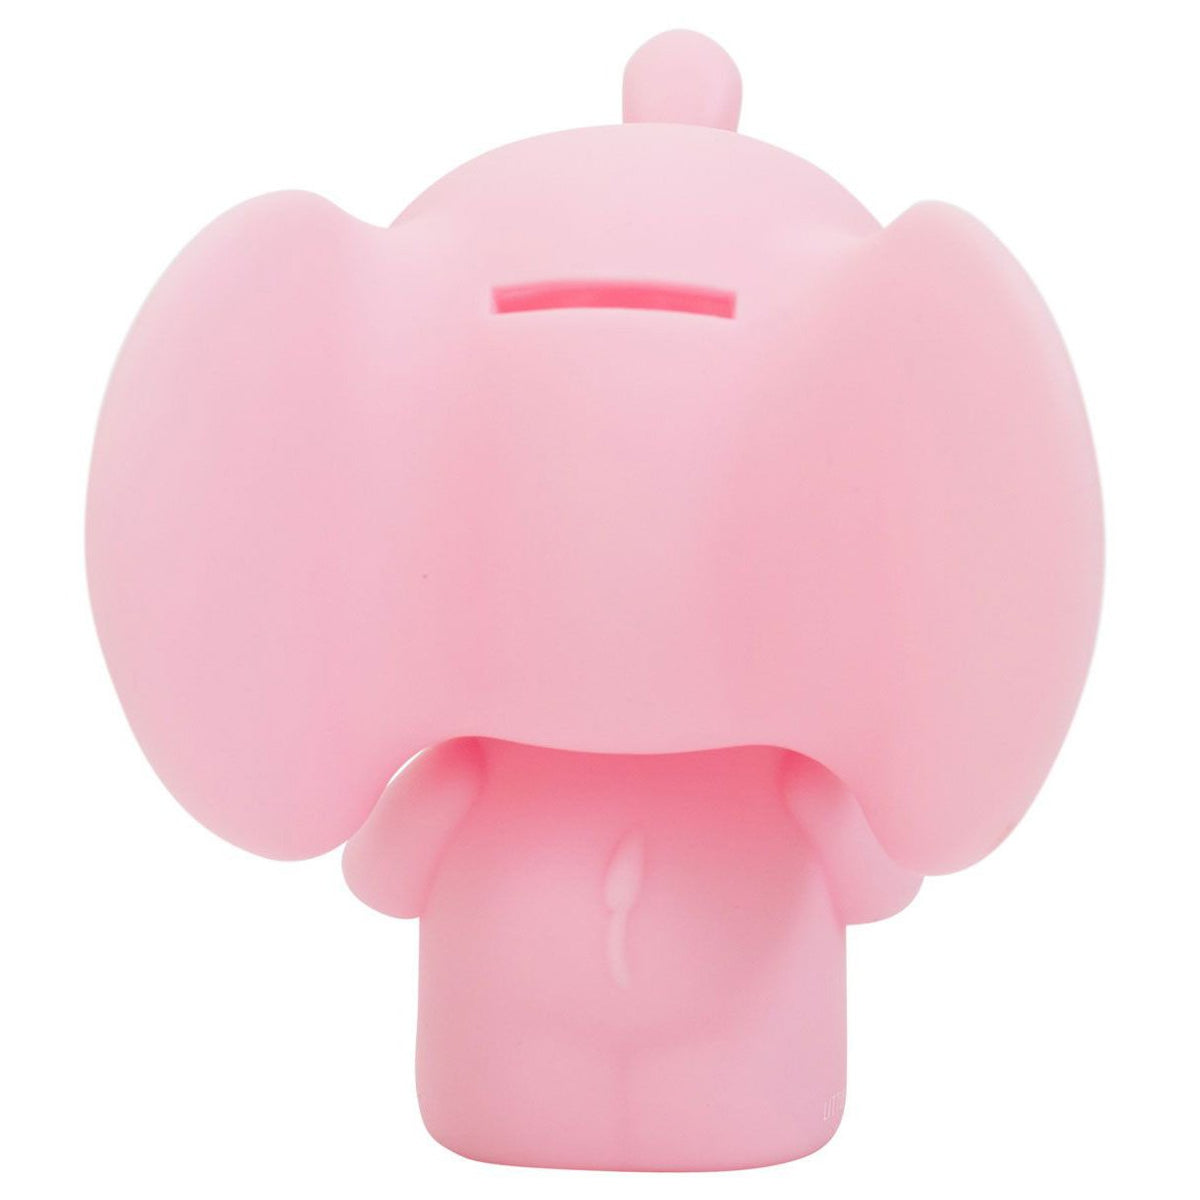 a-little-lovely-company-money-box-elephant-pink- (2)